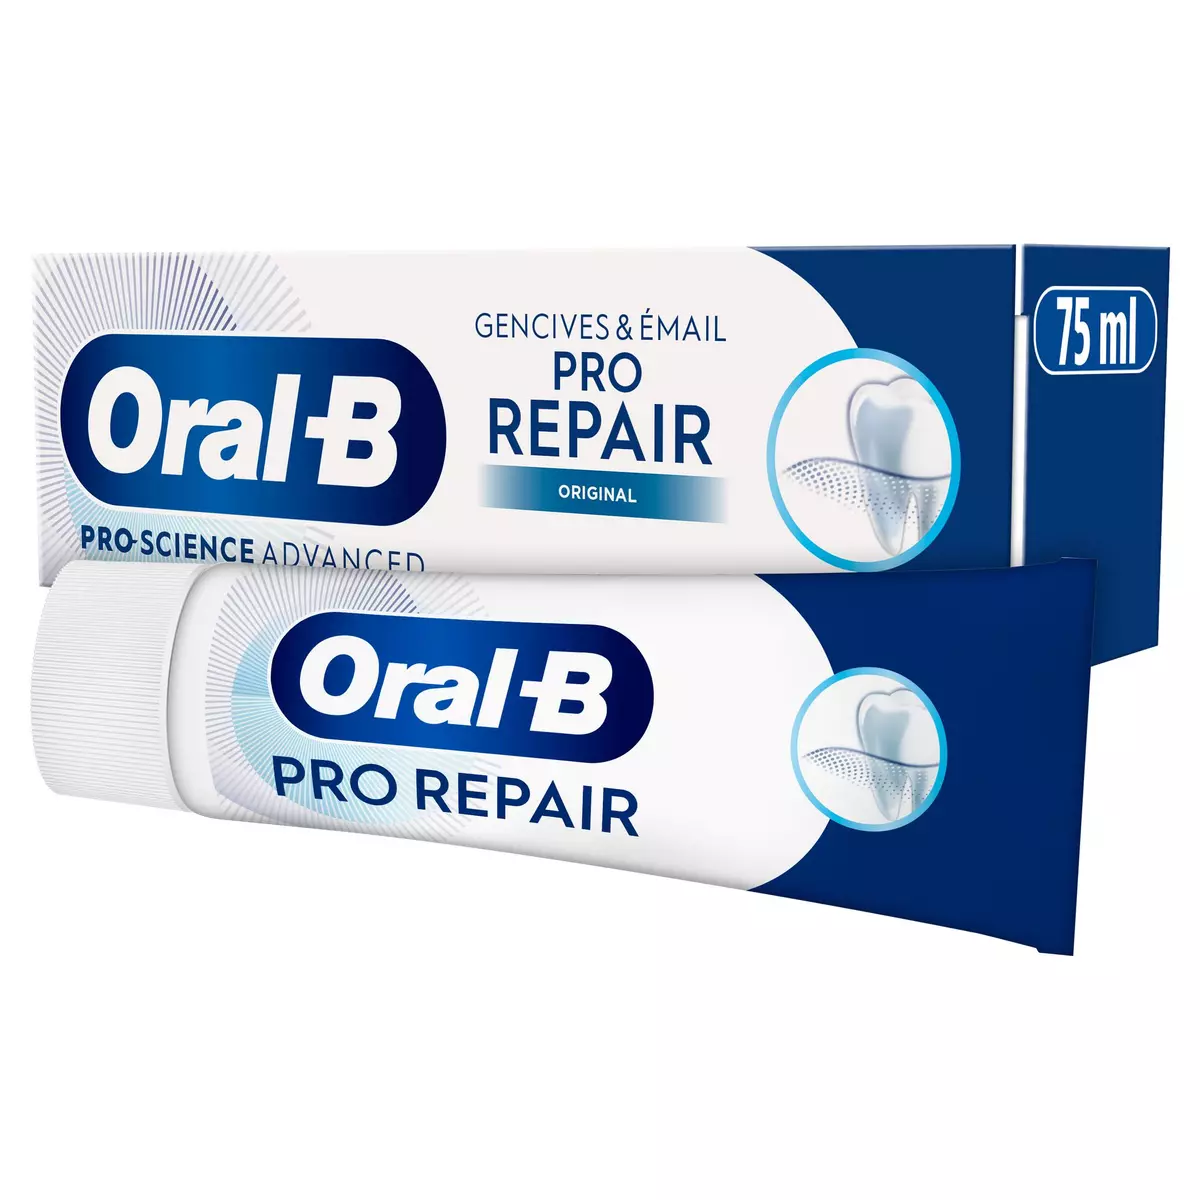 ORAL-B Pro Repair dentifrice original 75ml